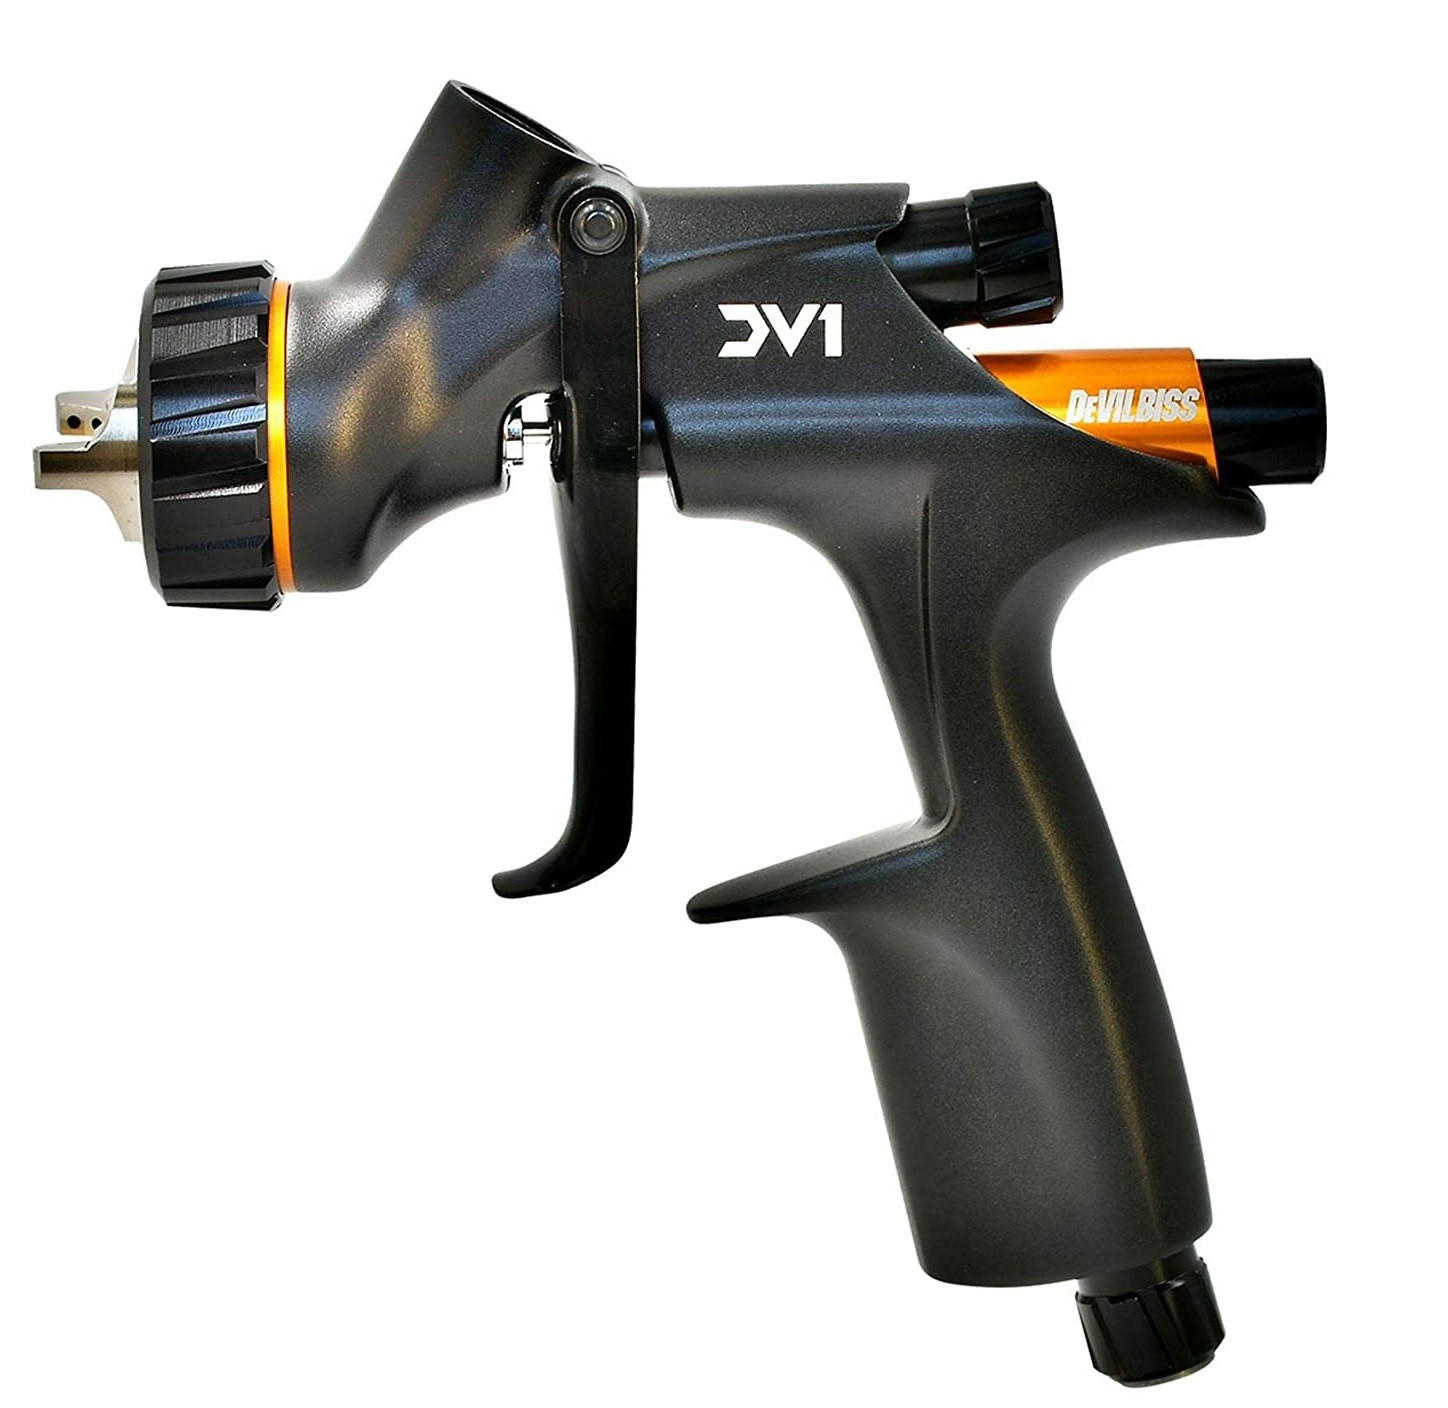 Pistola de Pintura Profissional DeVilbiss DV1-C Clearcoat própria para Verniz sem manômetro digital - Pistolas-HVLP